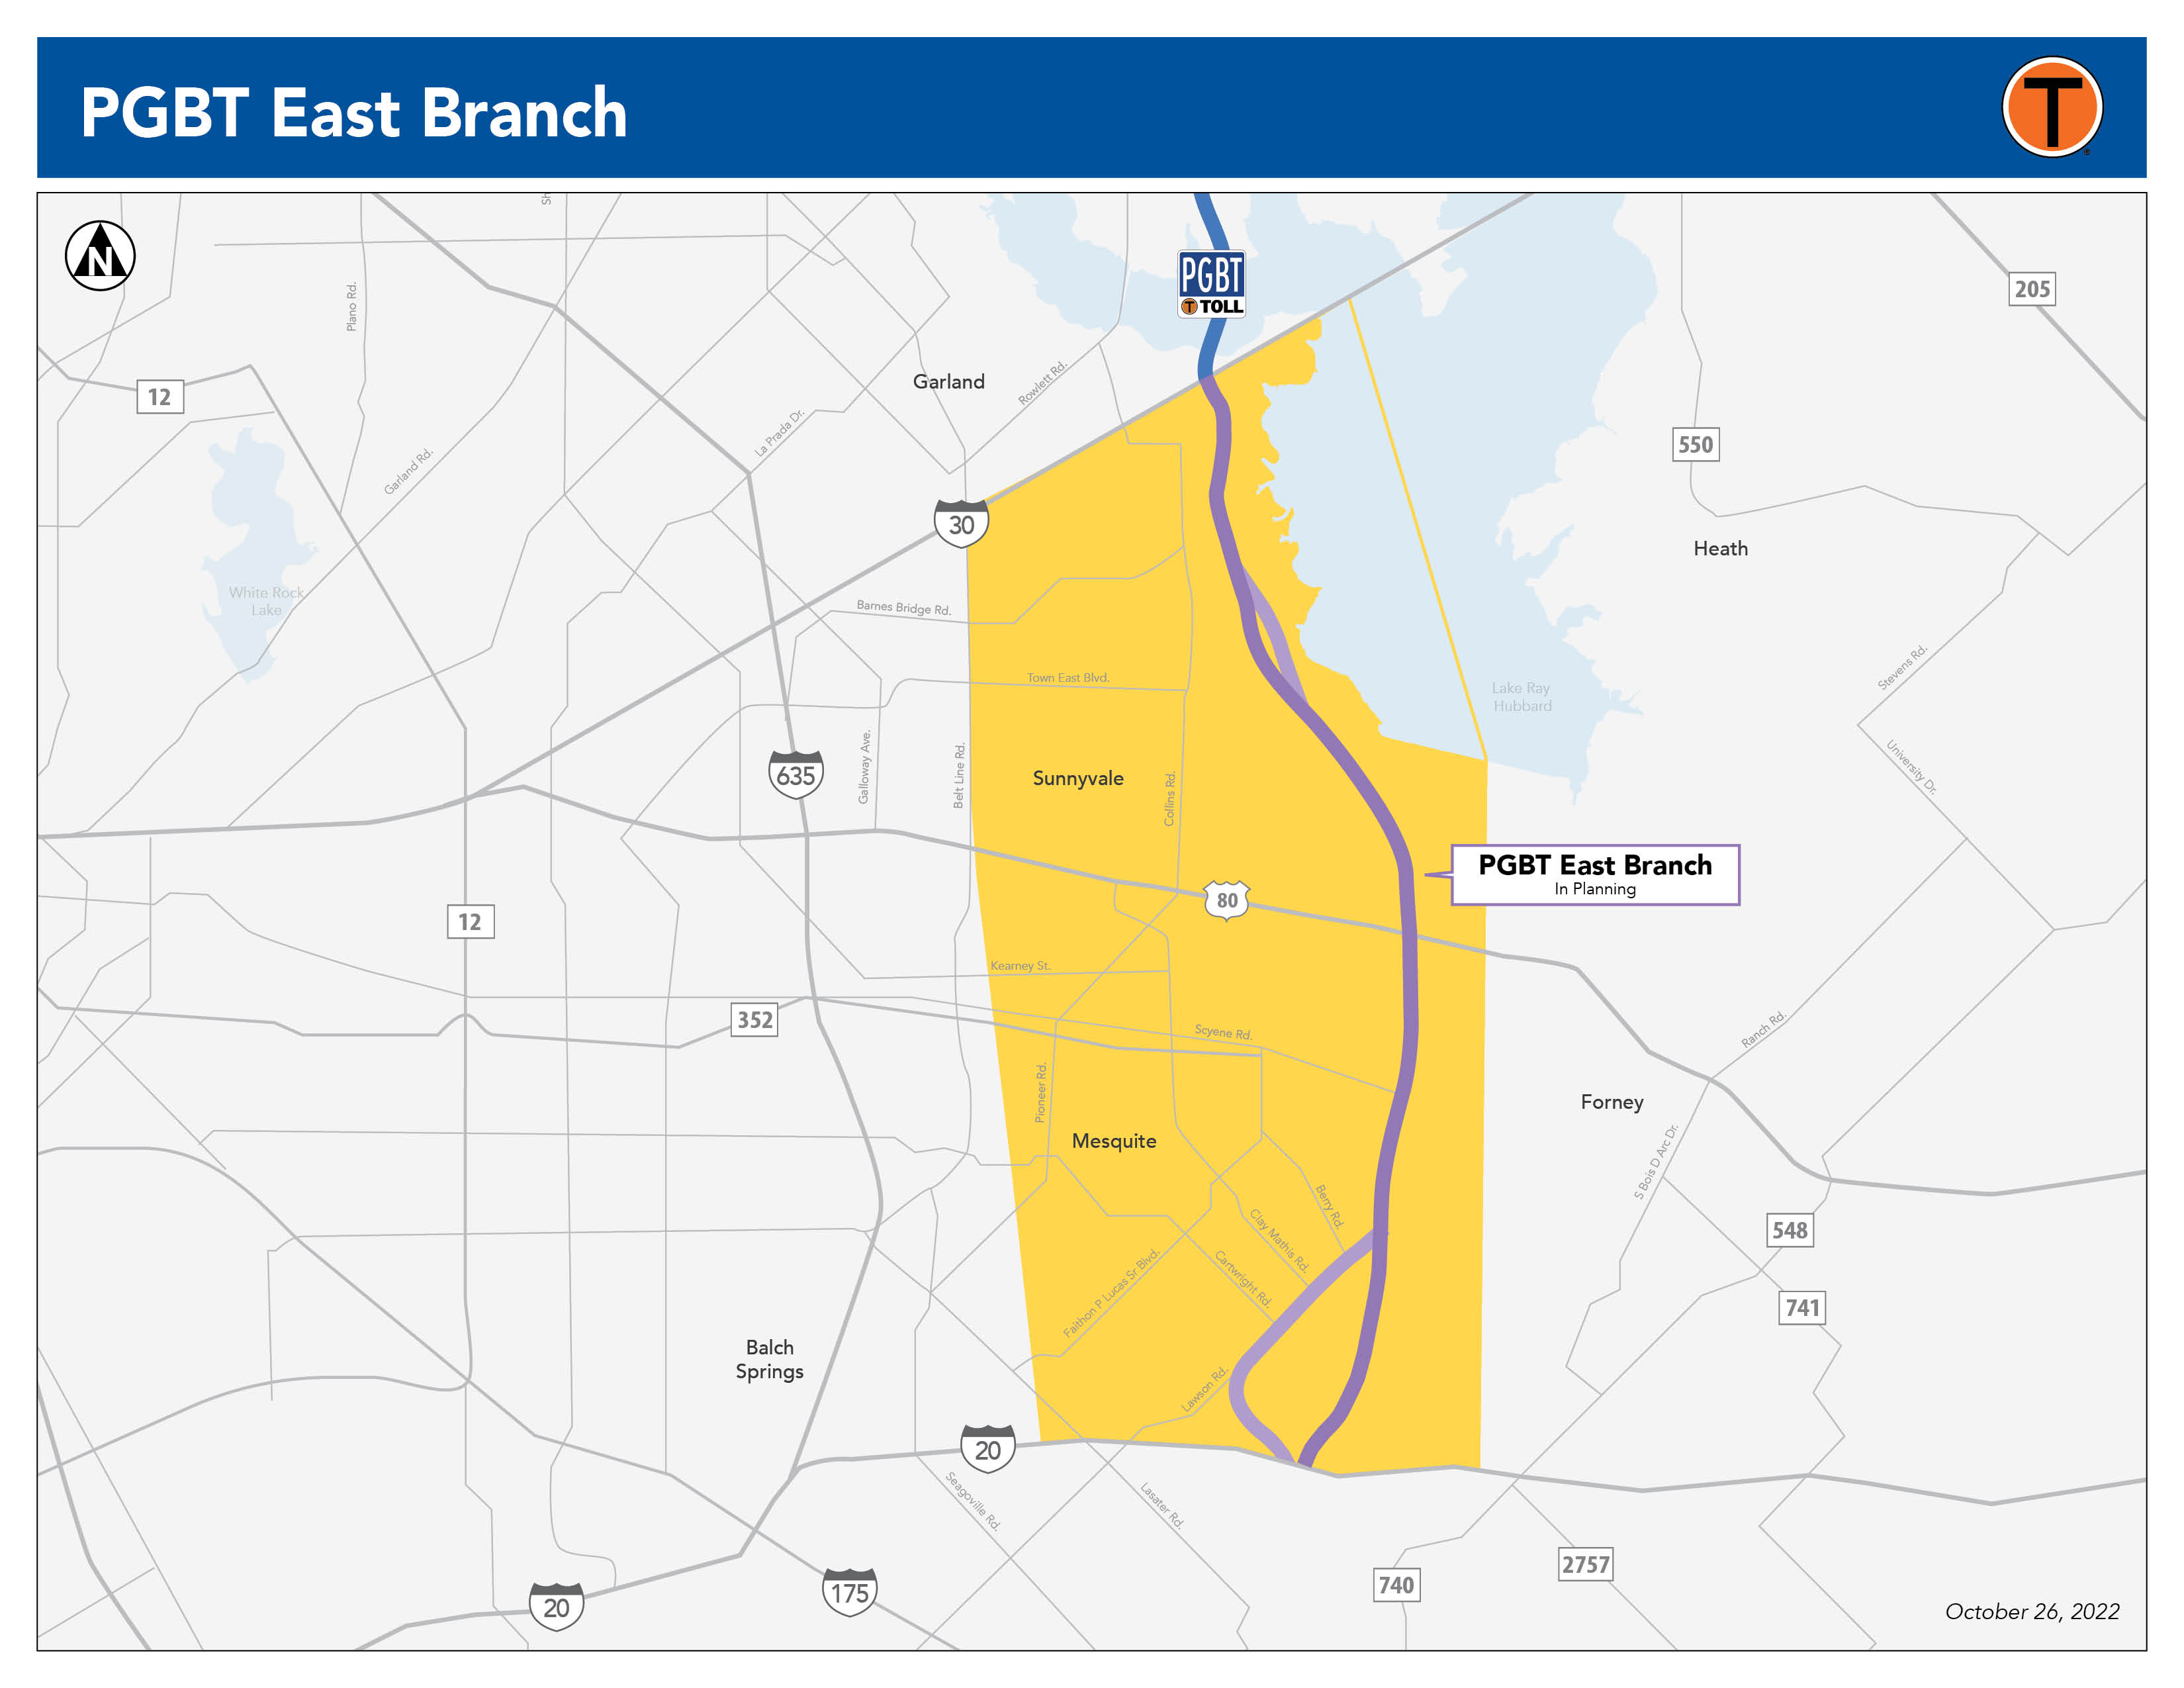 PGBT East Branch Project Map Horz 2022.10.26 V.01 0 